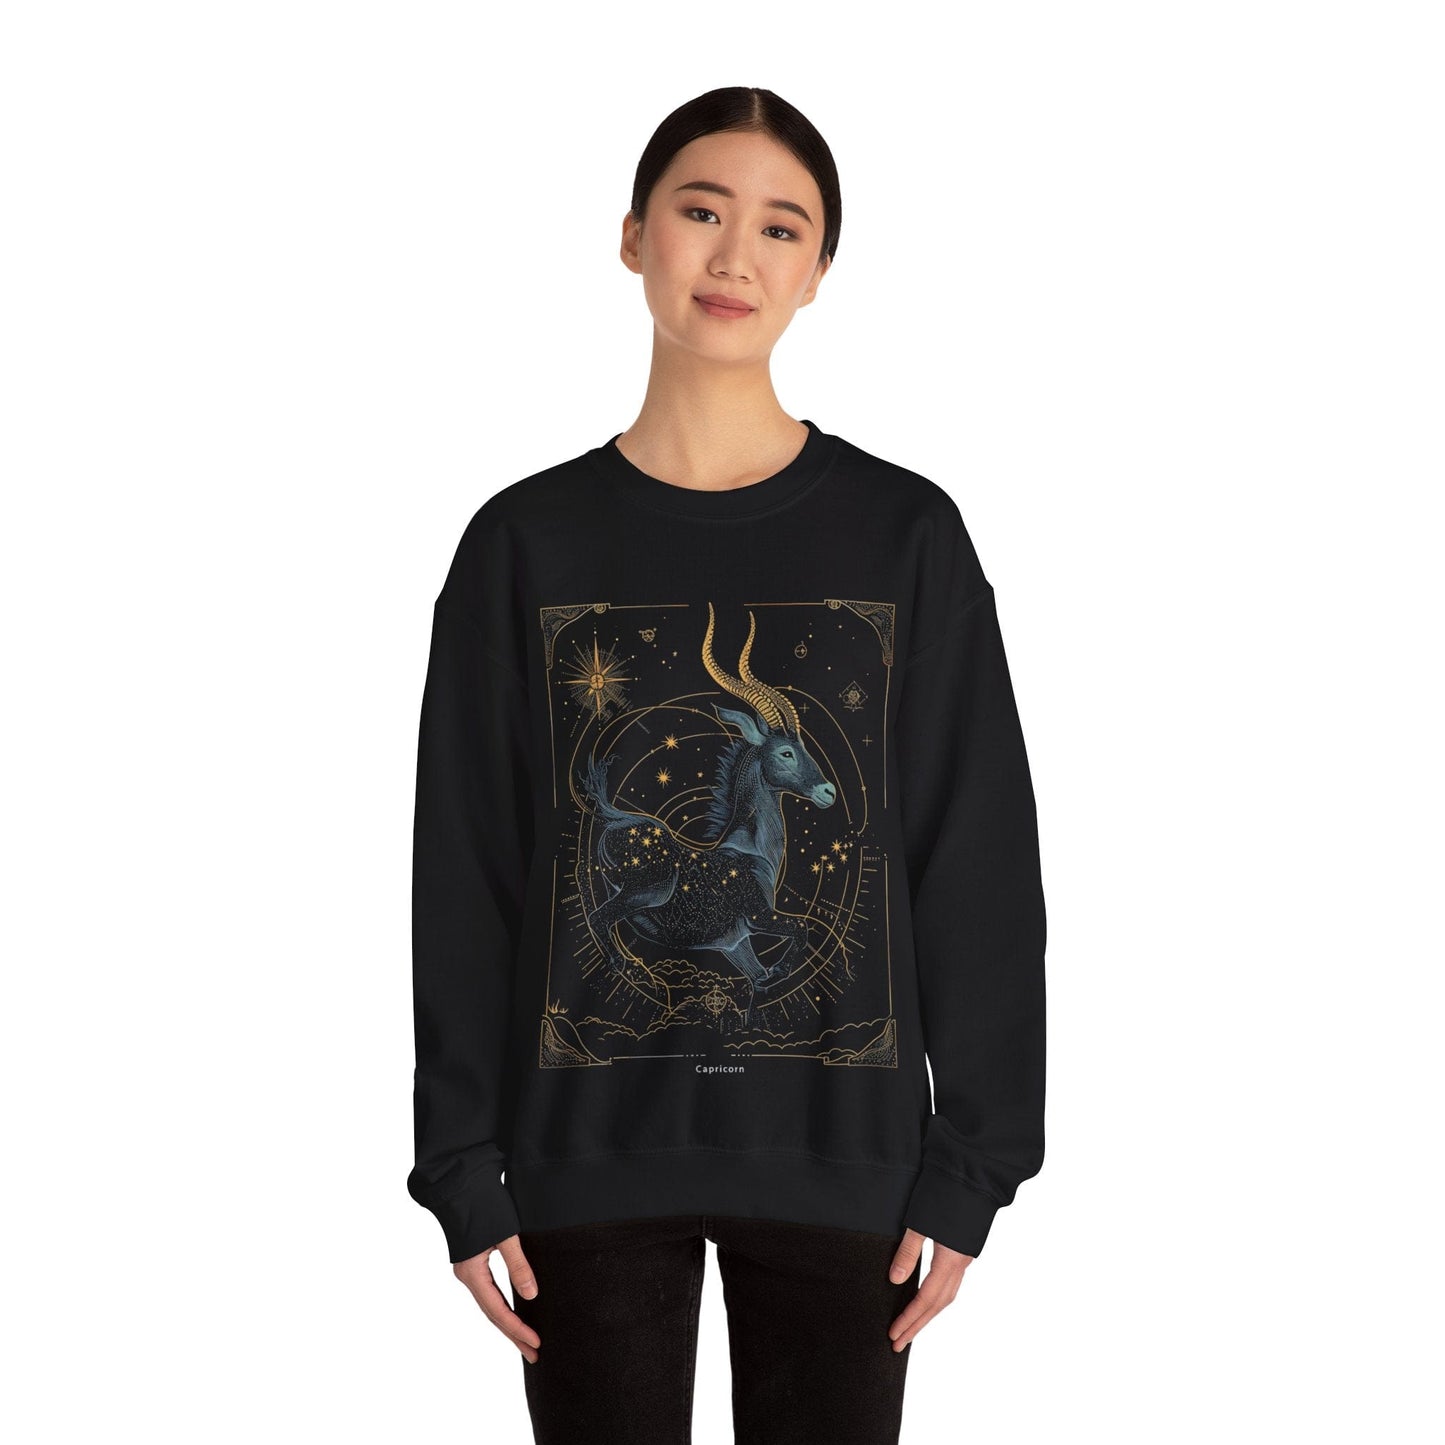 Sweatshirt Capricorn Celestial Journey Sweatshirt: Stargaze in Comfort and Style